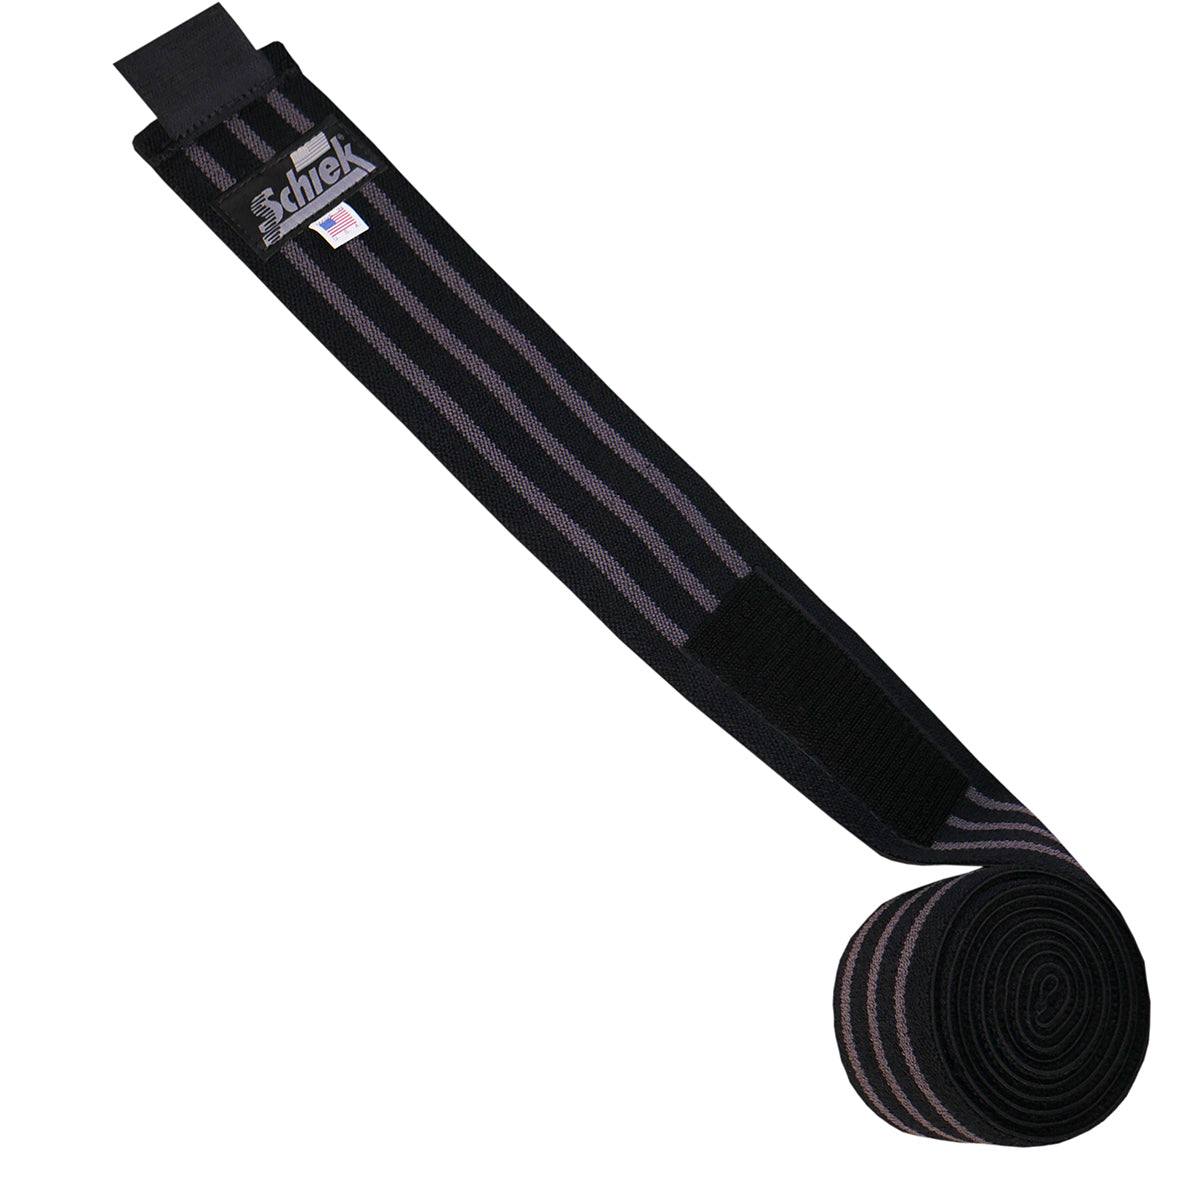 Schiek Sports Black Out Cotton Elastic Hook and Loop Knee Wraps - Black/Silver Schiek Sports